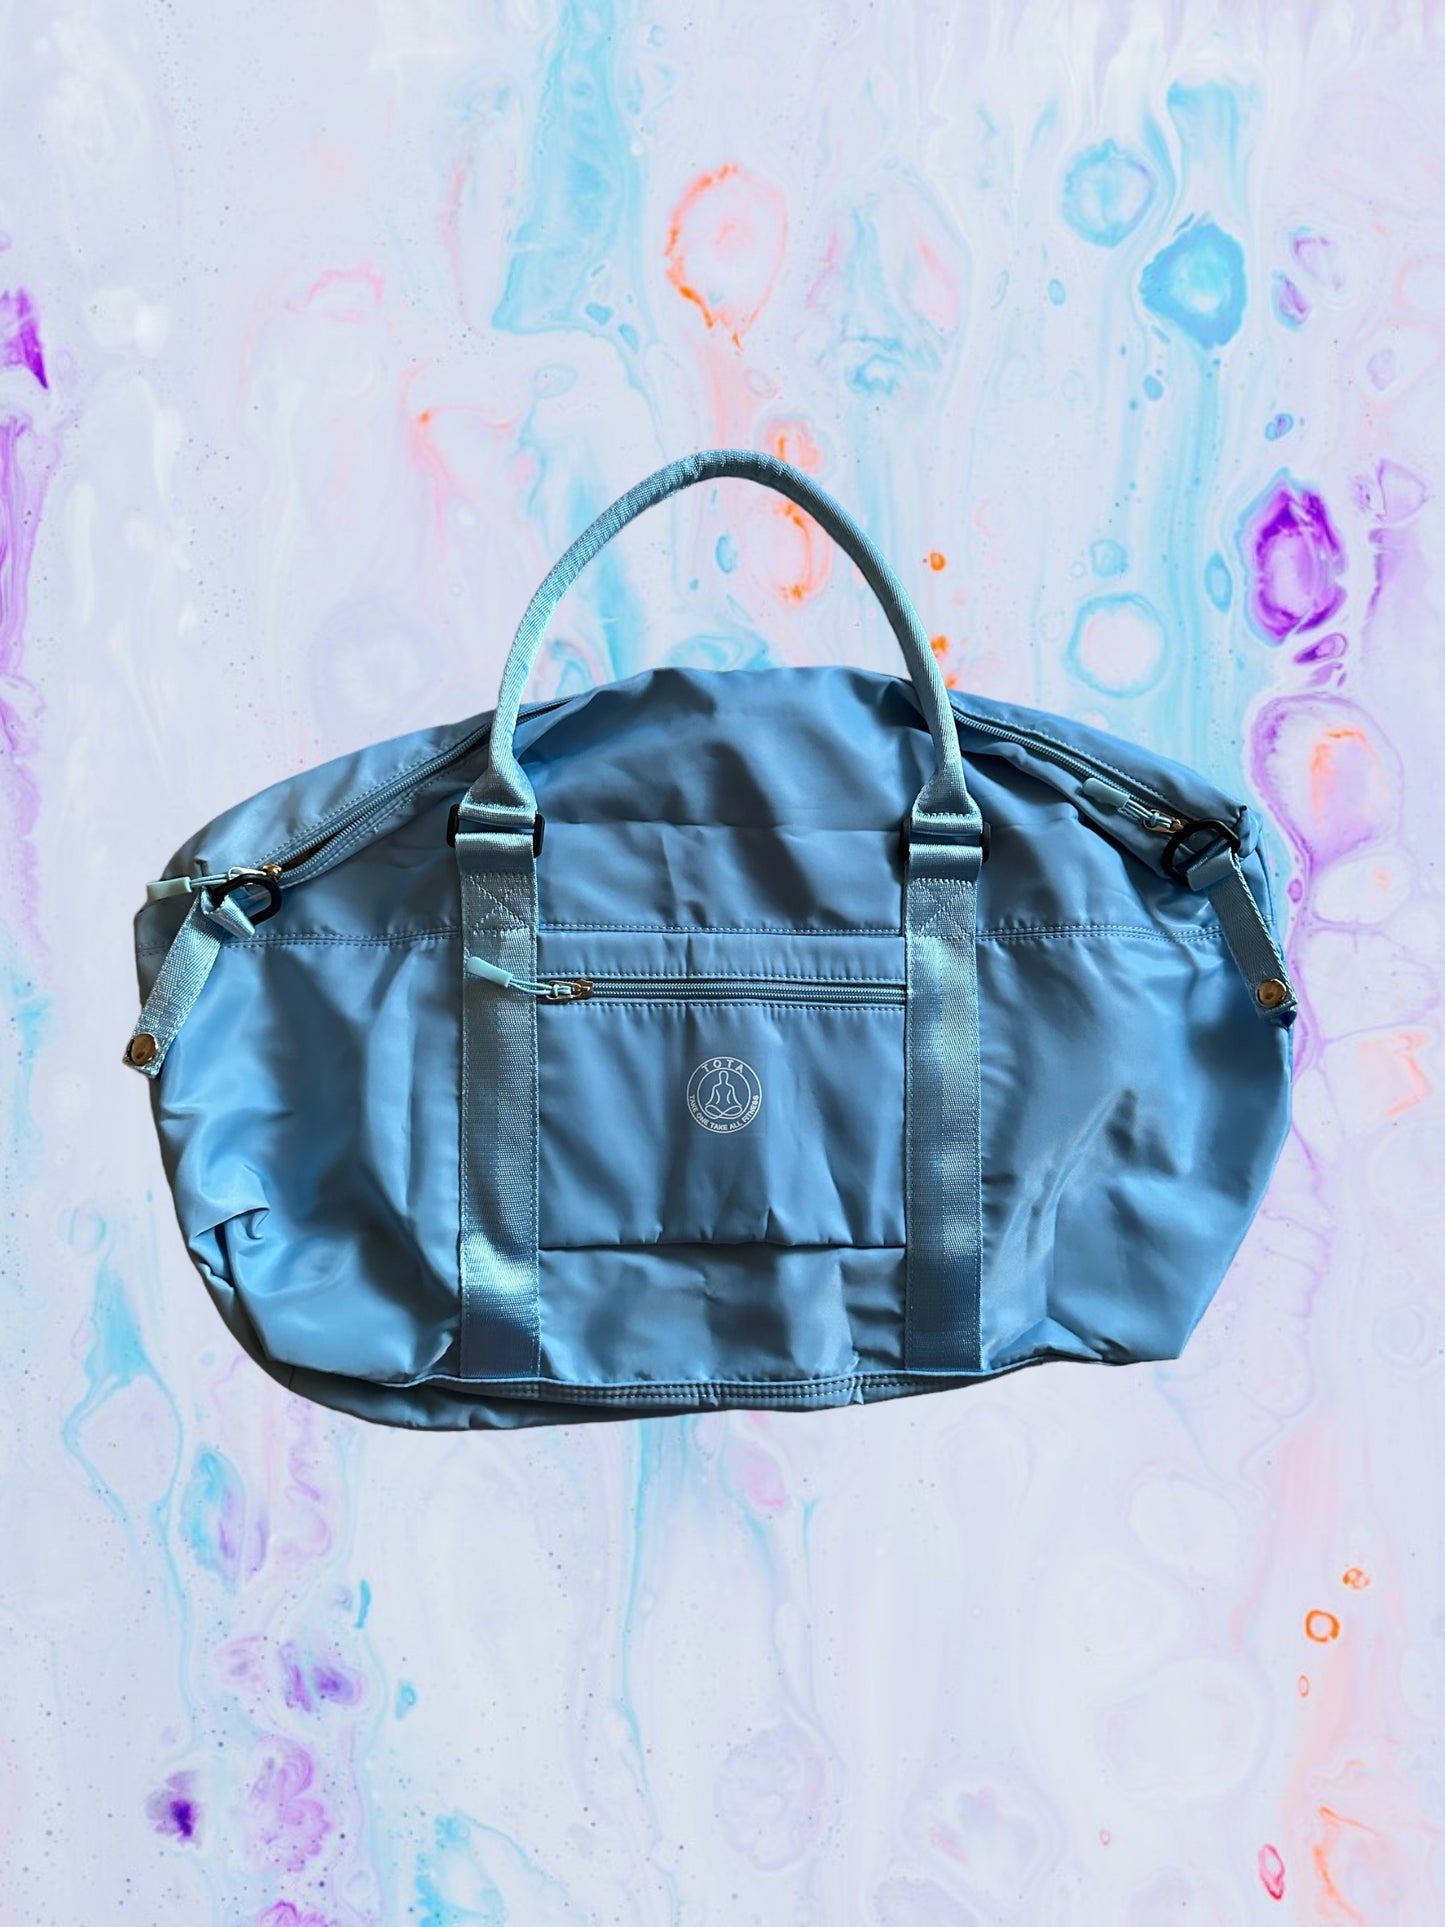 The “Let’s Go Anywhere” Bag